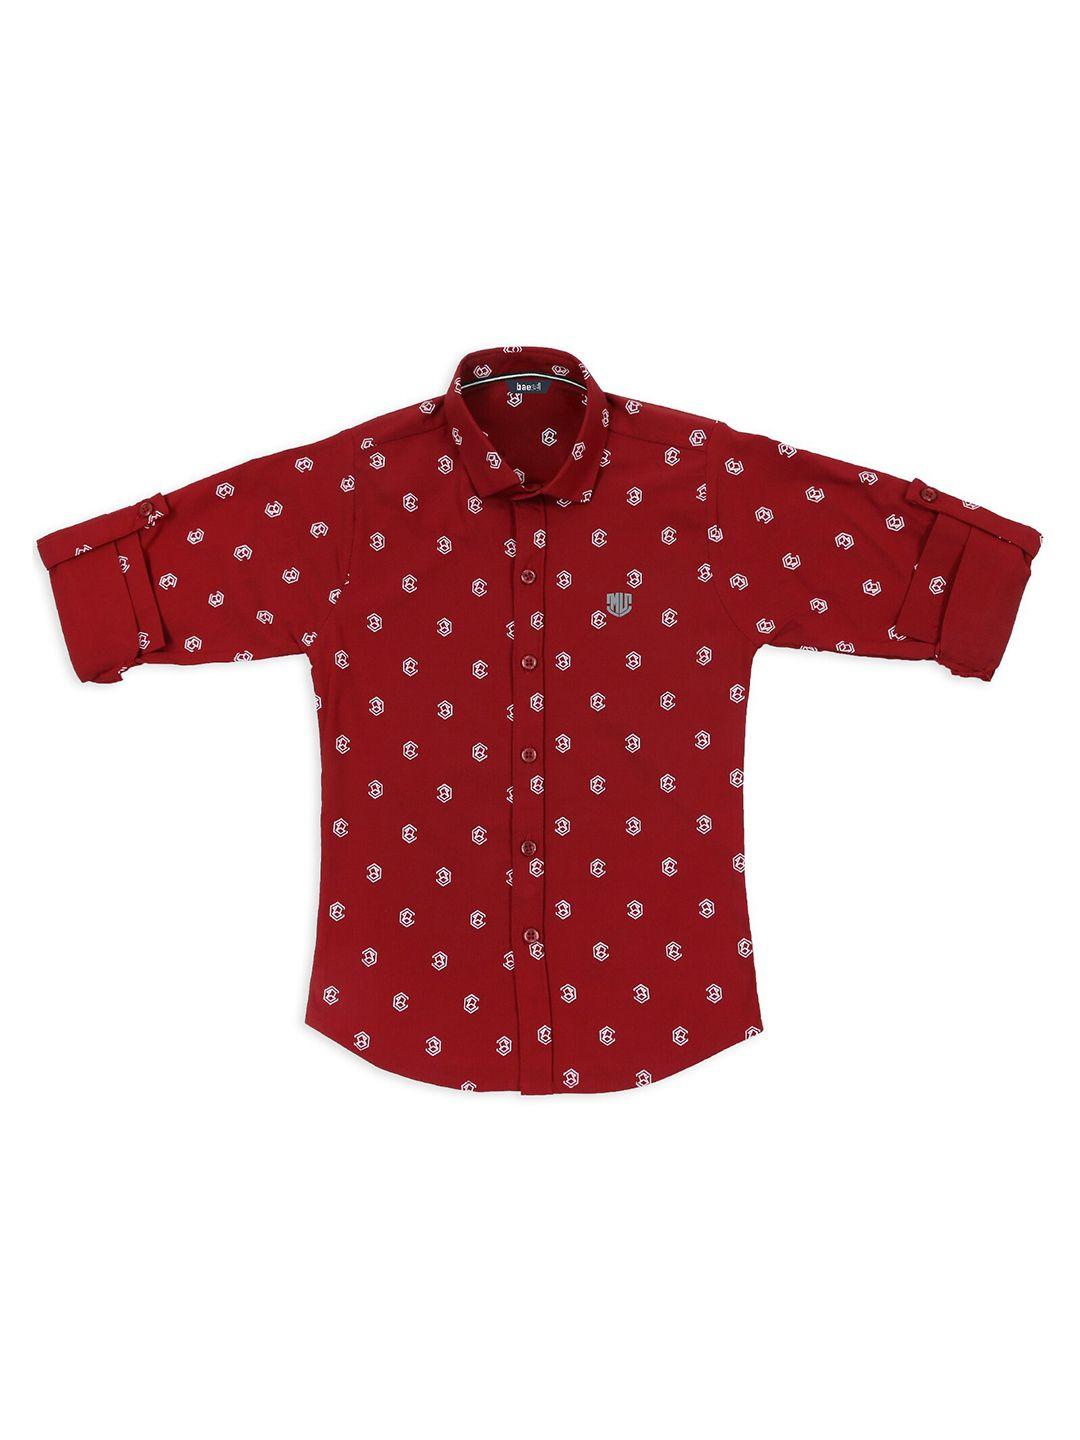 baesd boys classic geometric printed spread collar long sleeves cotton casual shirt